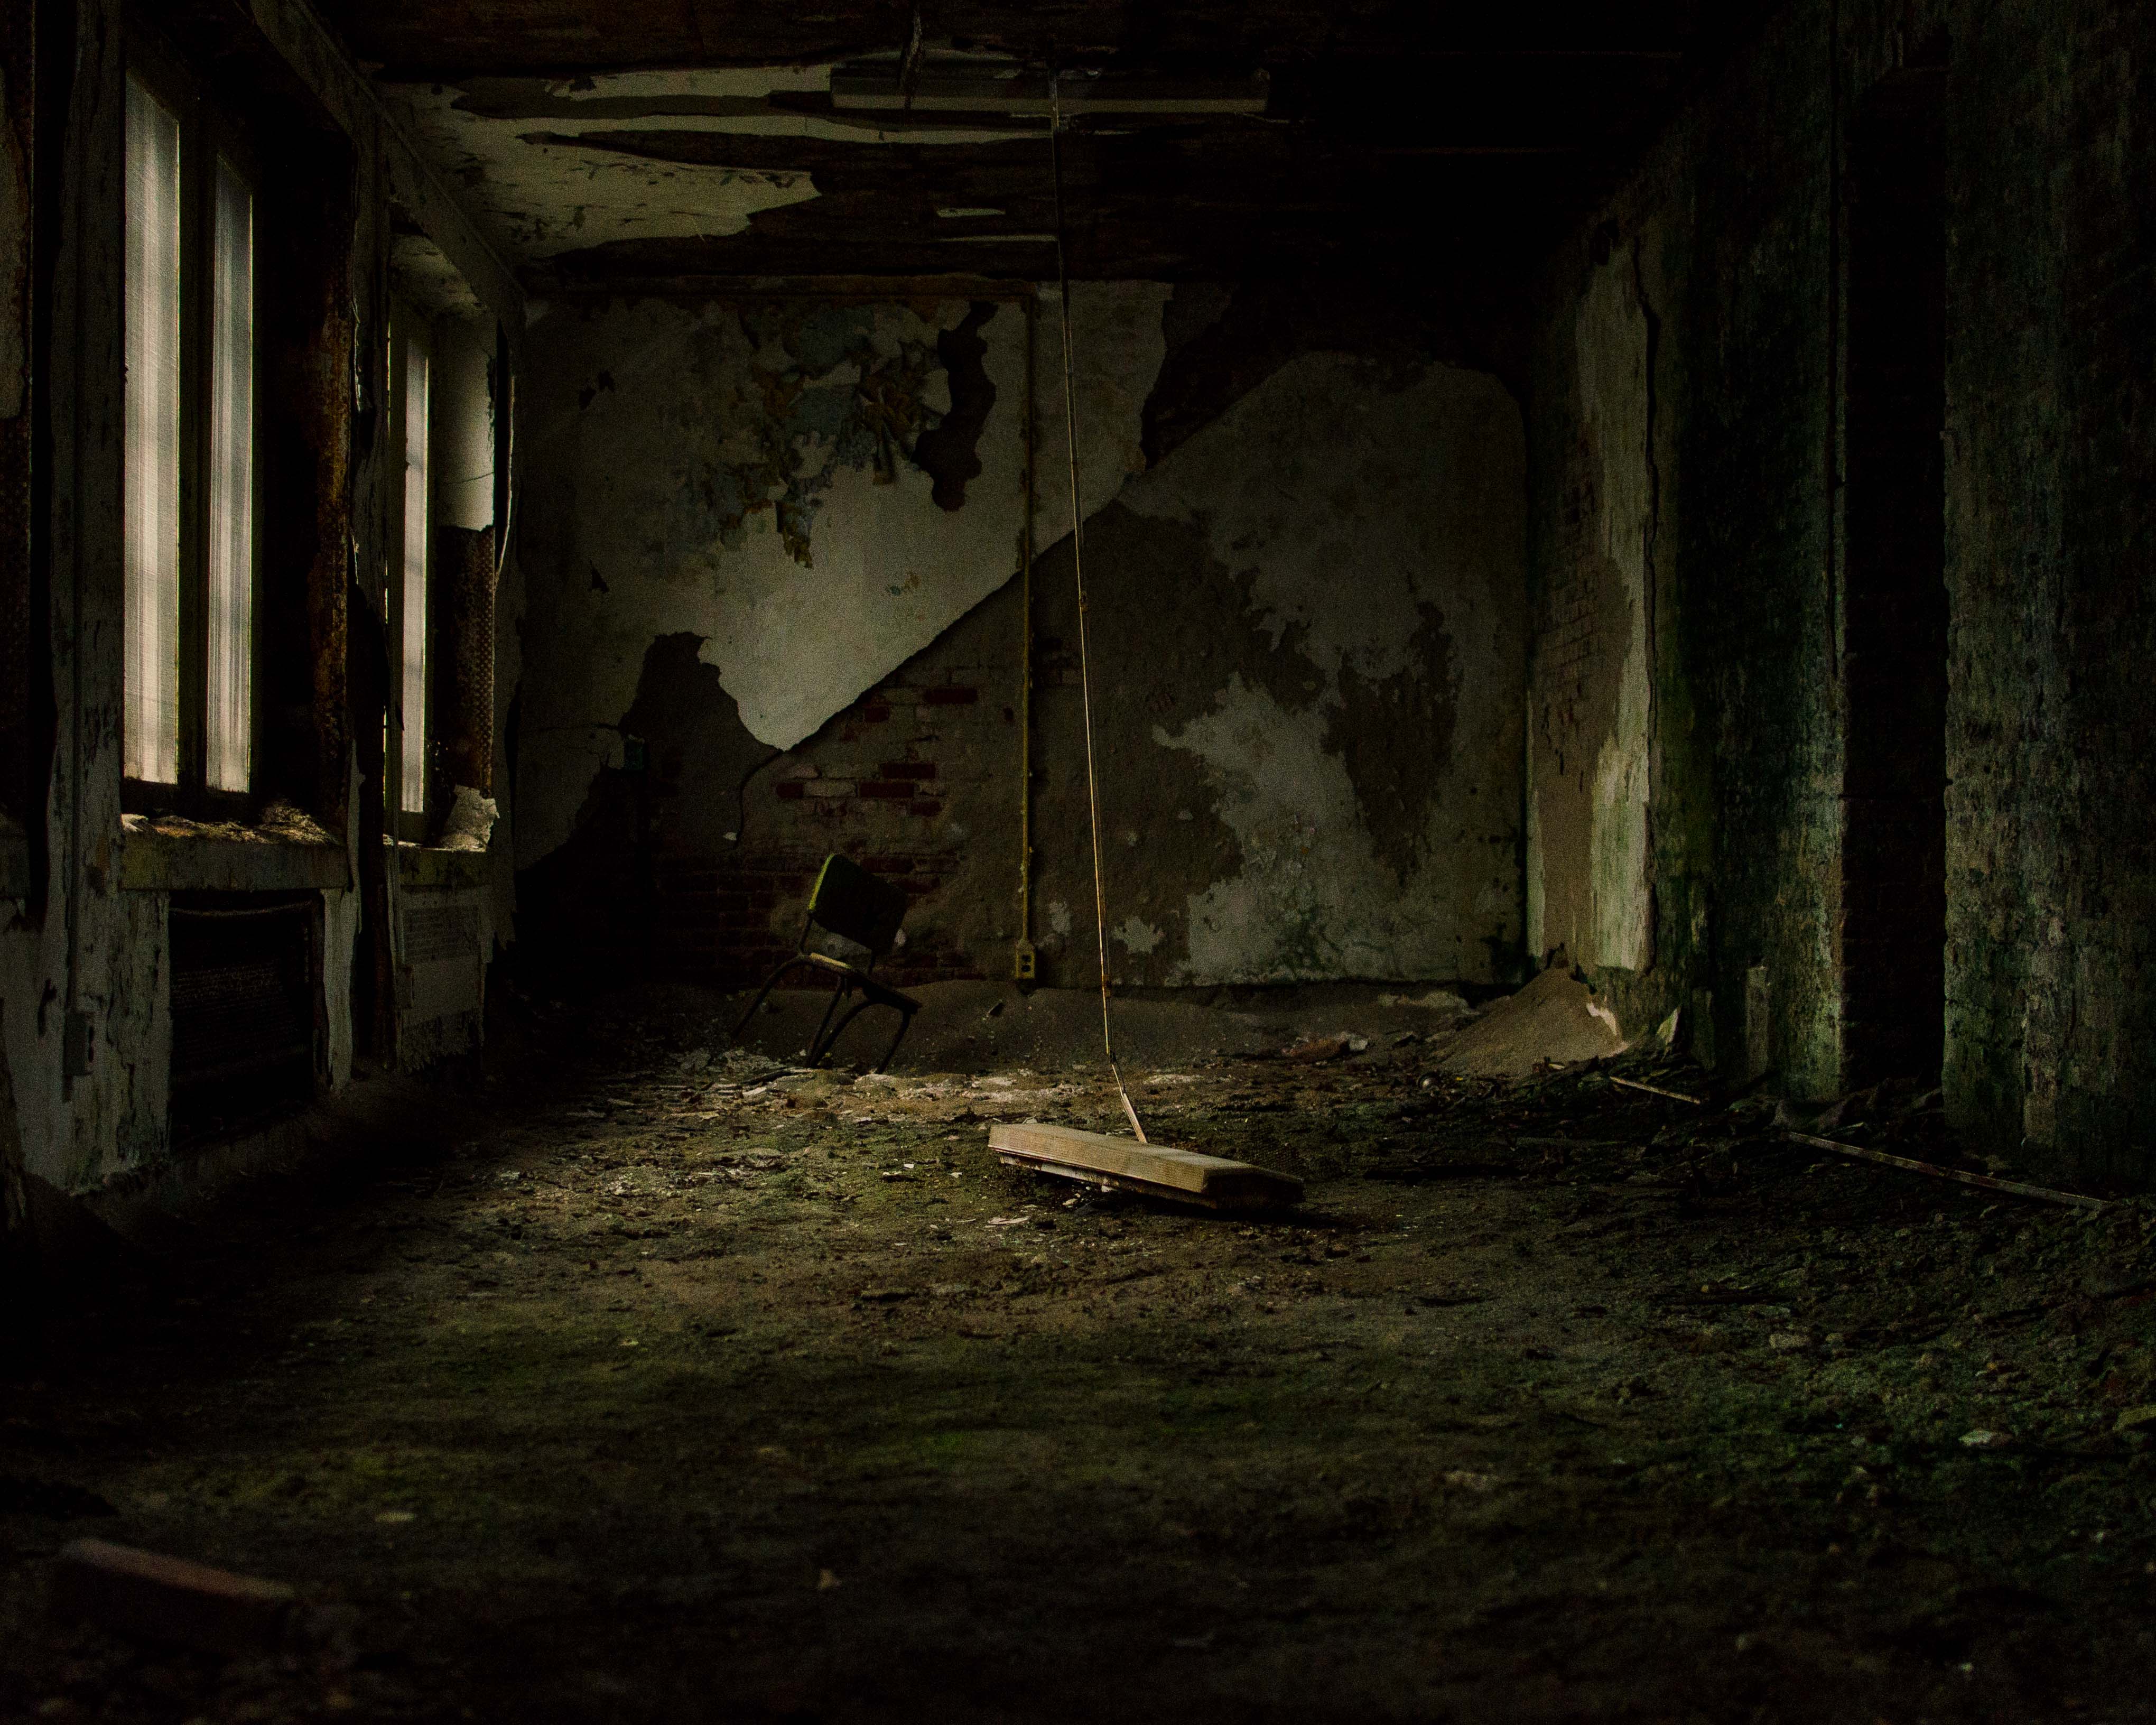 Scary horror house 2. Заброшенная комната. Пустая заброшенная комната. Темная заброшенная комната. Заброшенное здание ночью.